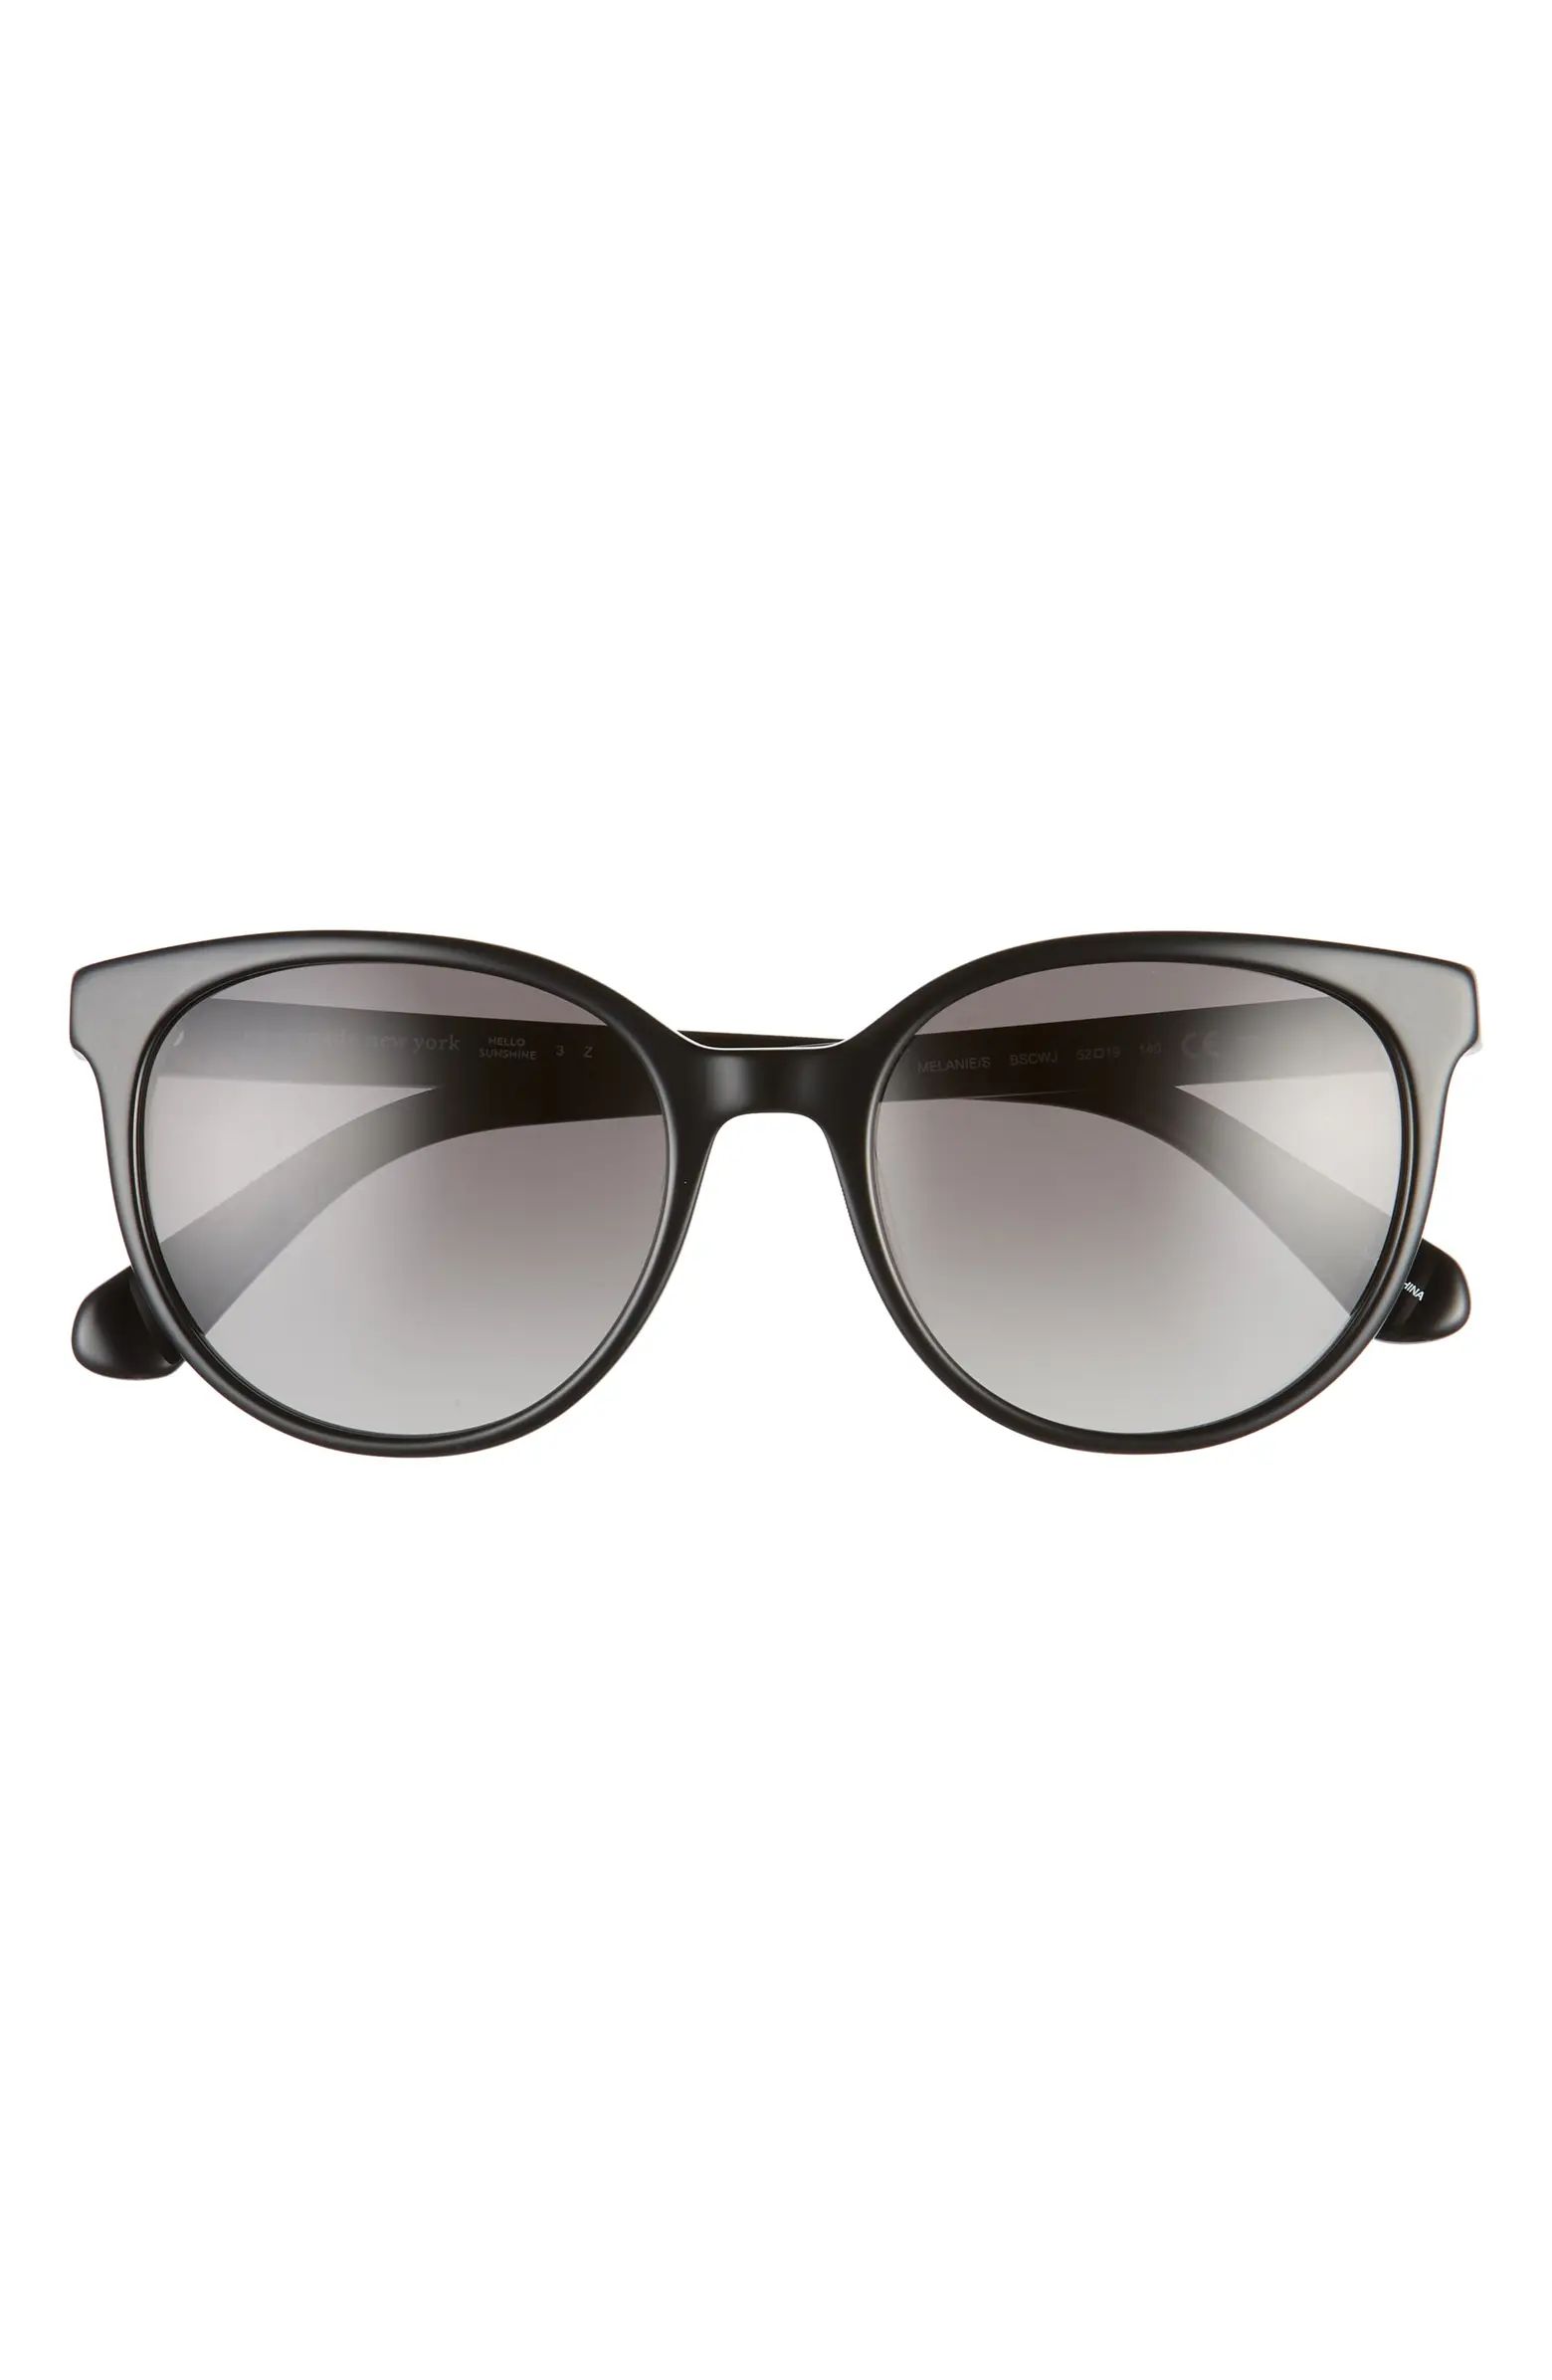 melanies 52mm polarized round sunglasses | Nordstrom